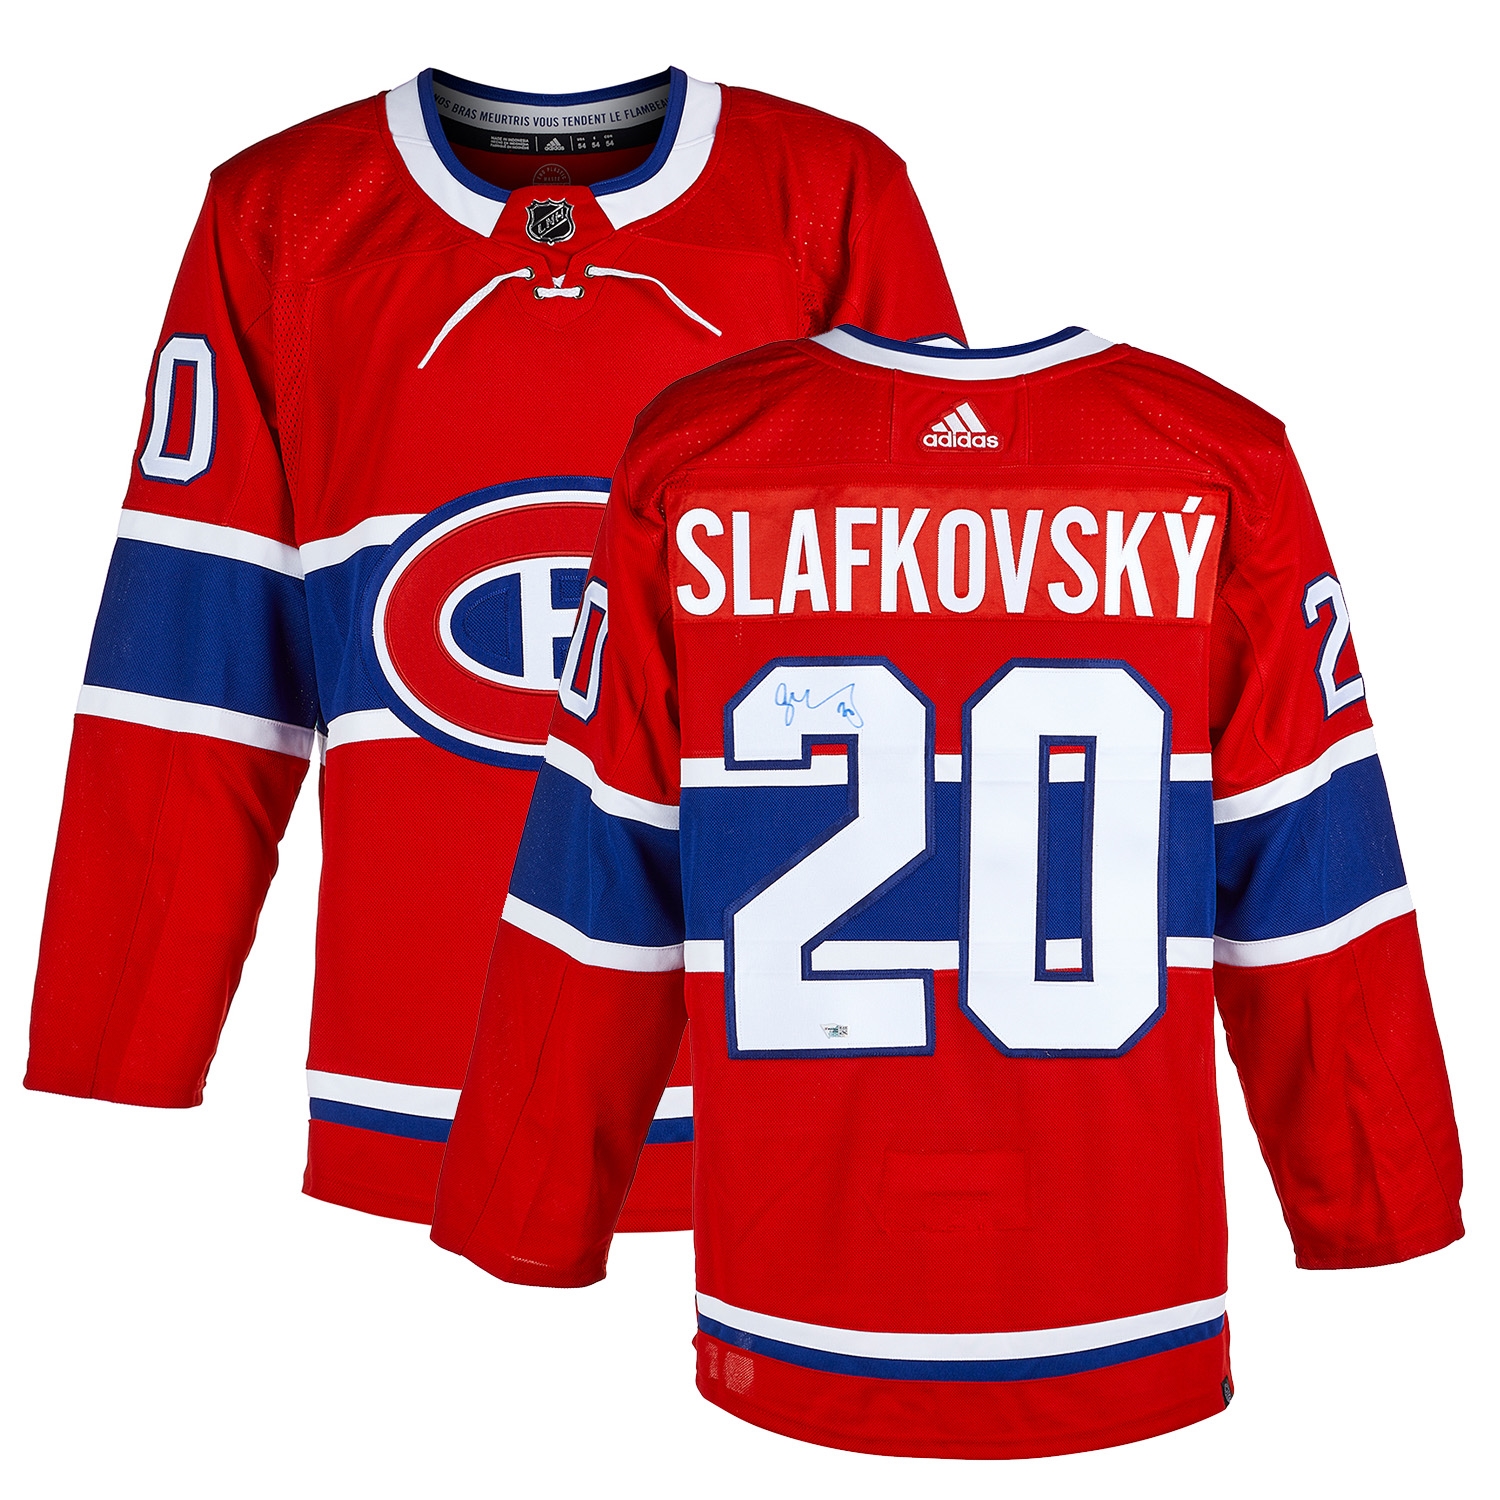 Juraj Slafkovsky Autographed Montreal Canadiens adidas Jersey